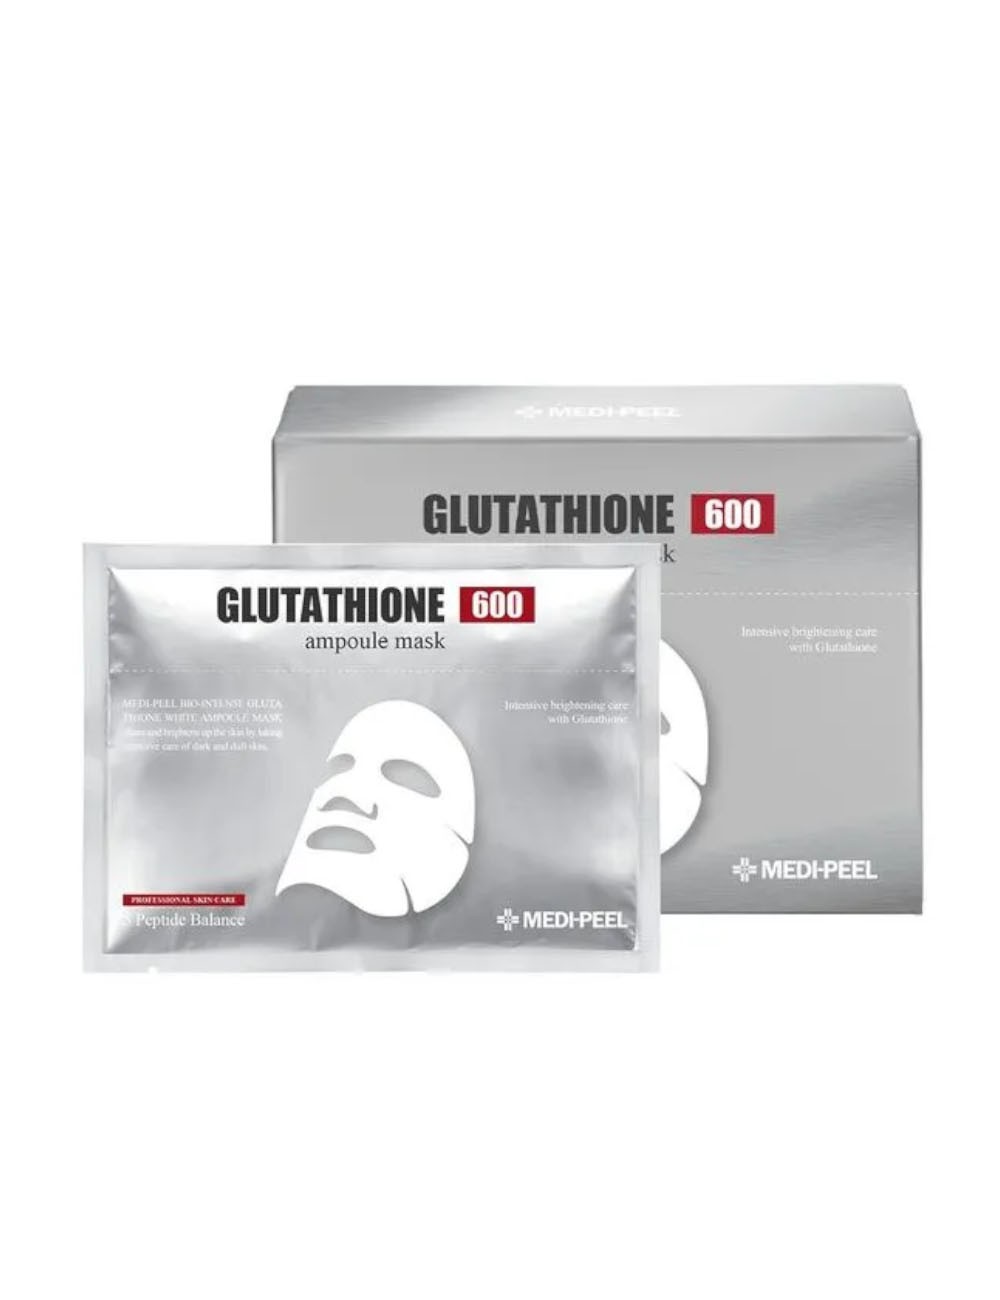 MEDI-PEEL Bio-Intense Glutathione 600 Ampoule Mask